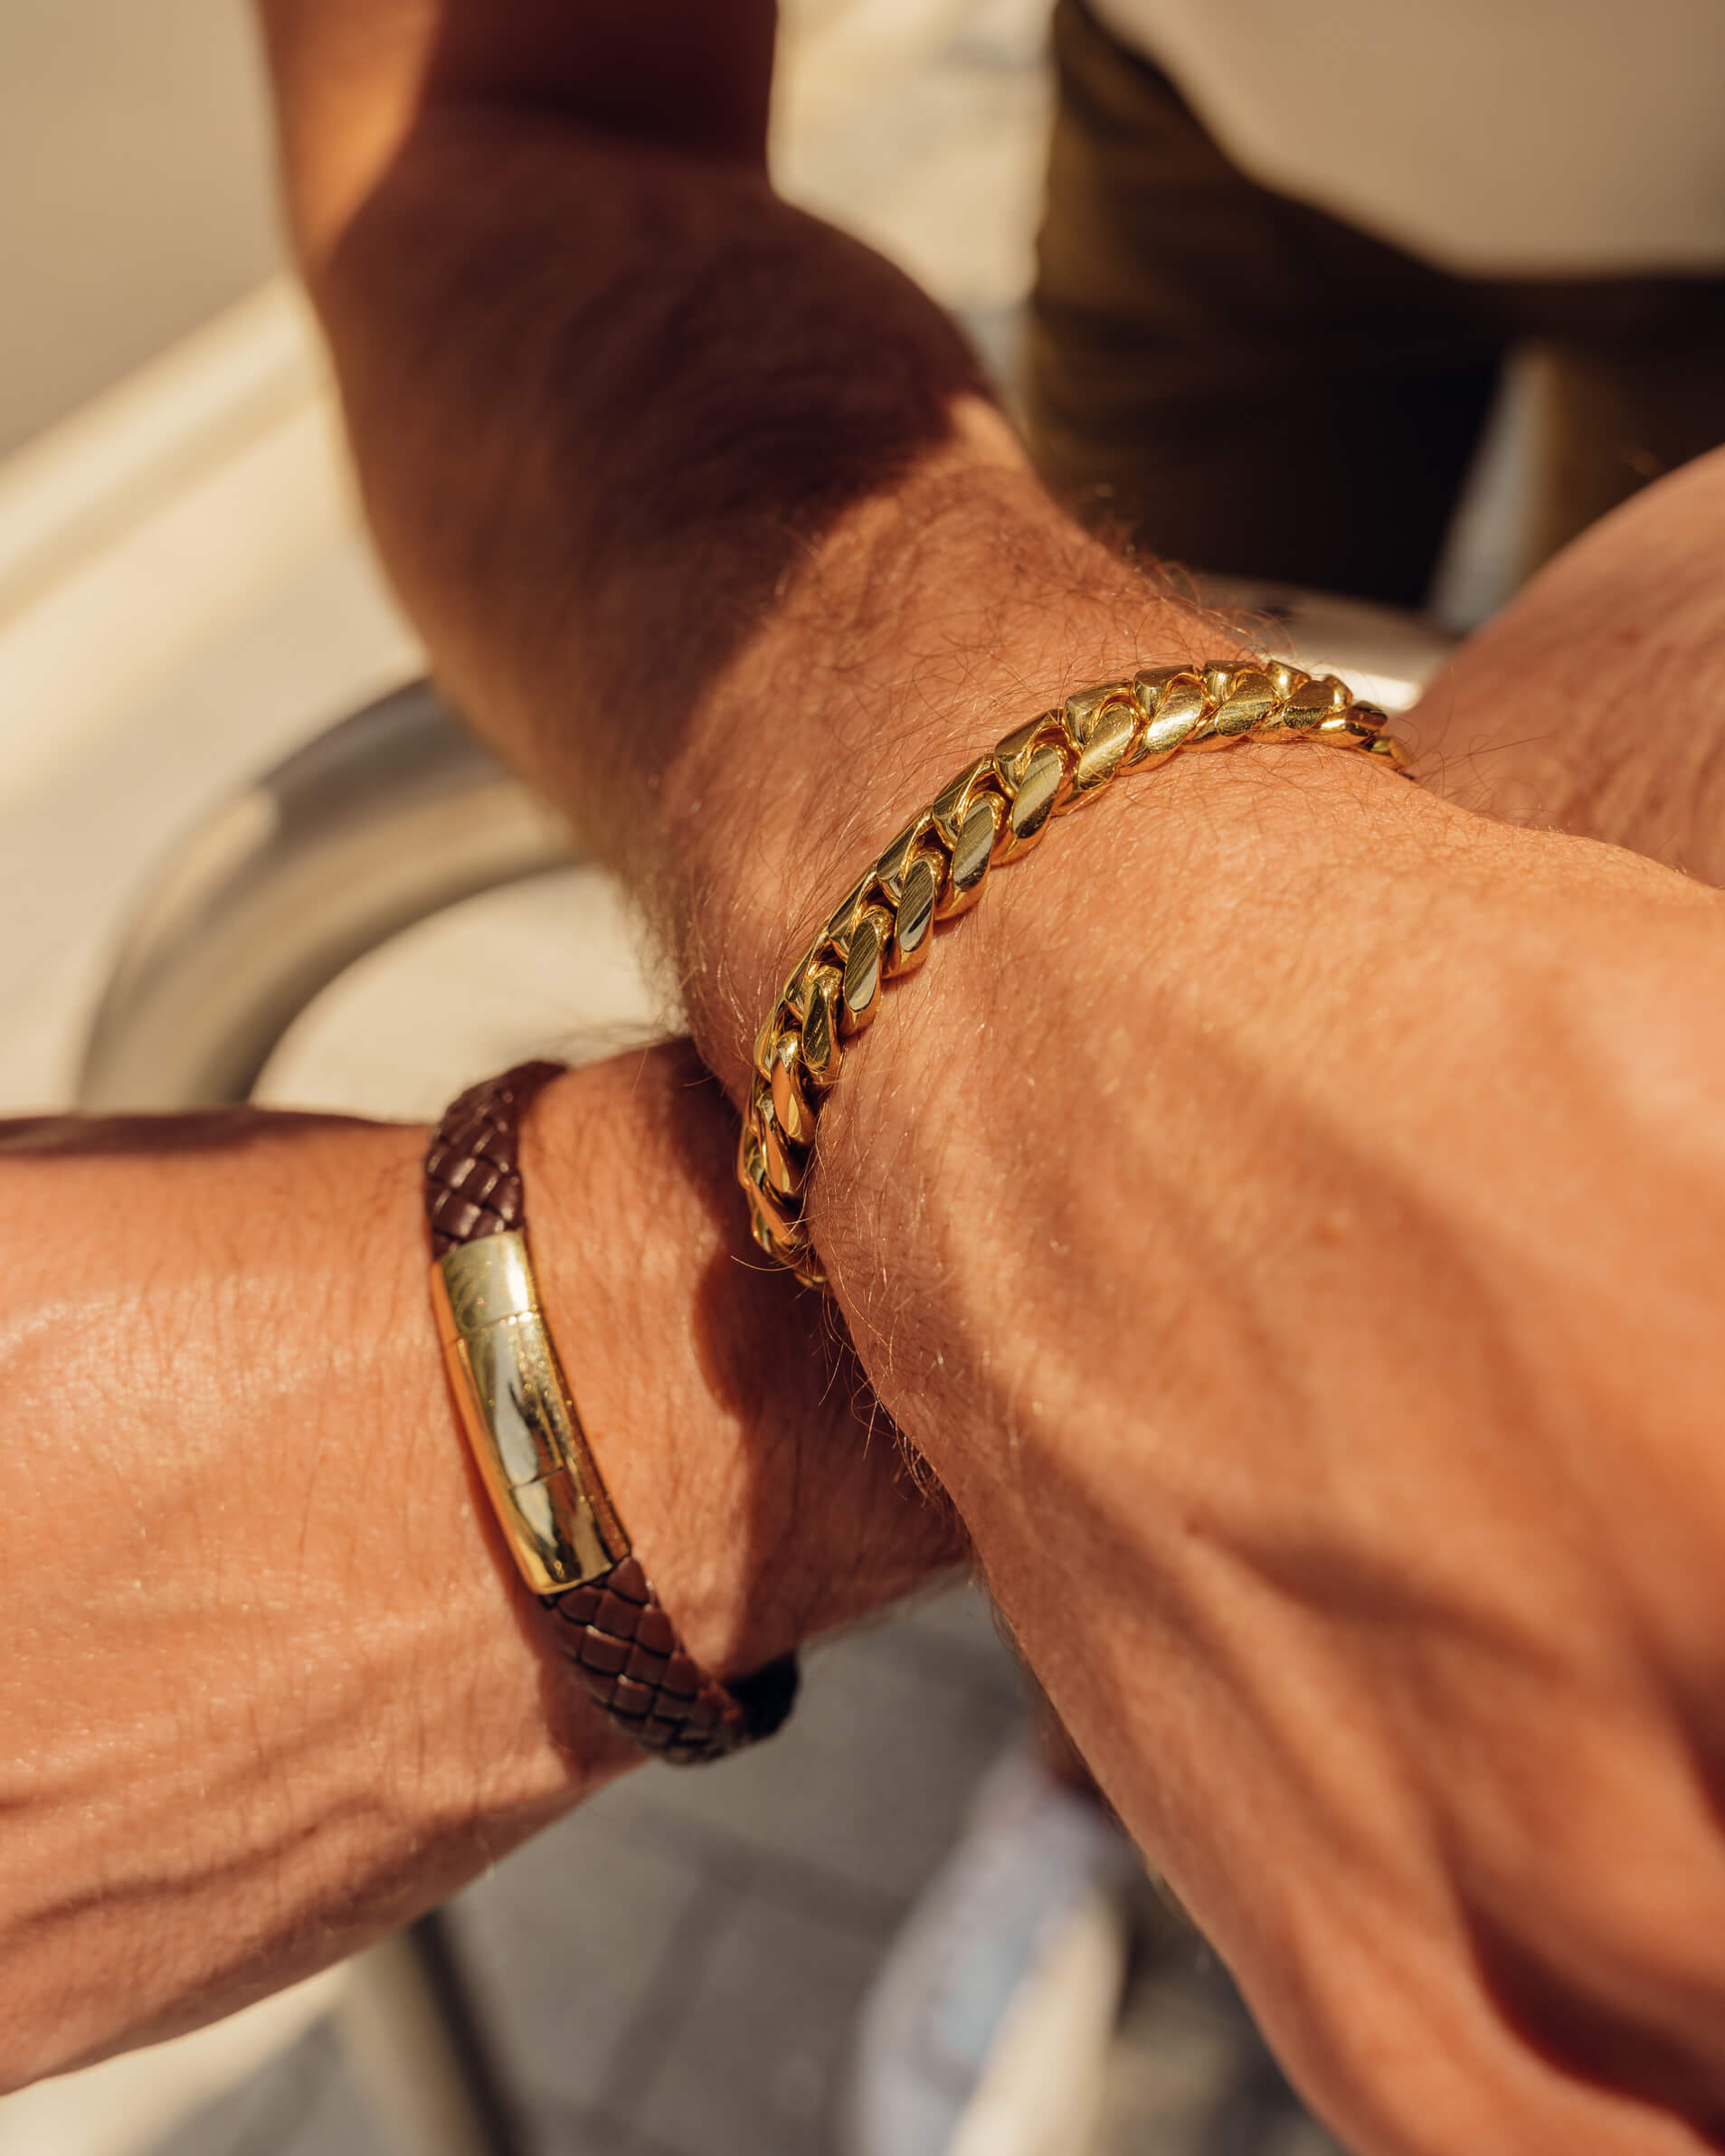 Crystal Embed strap gold bracelet, गोल्ड प्लेटेड ब्रेसलेट - The Woke  Collection, Lucknow | ID: 2853169388597